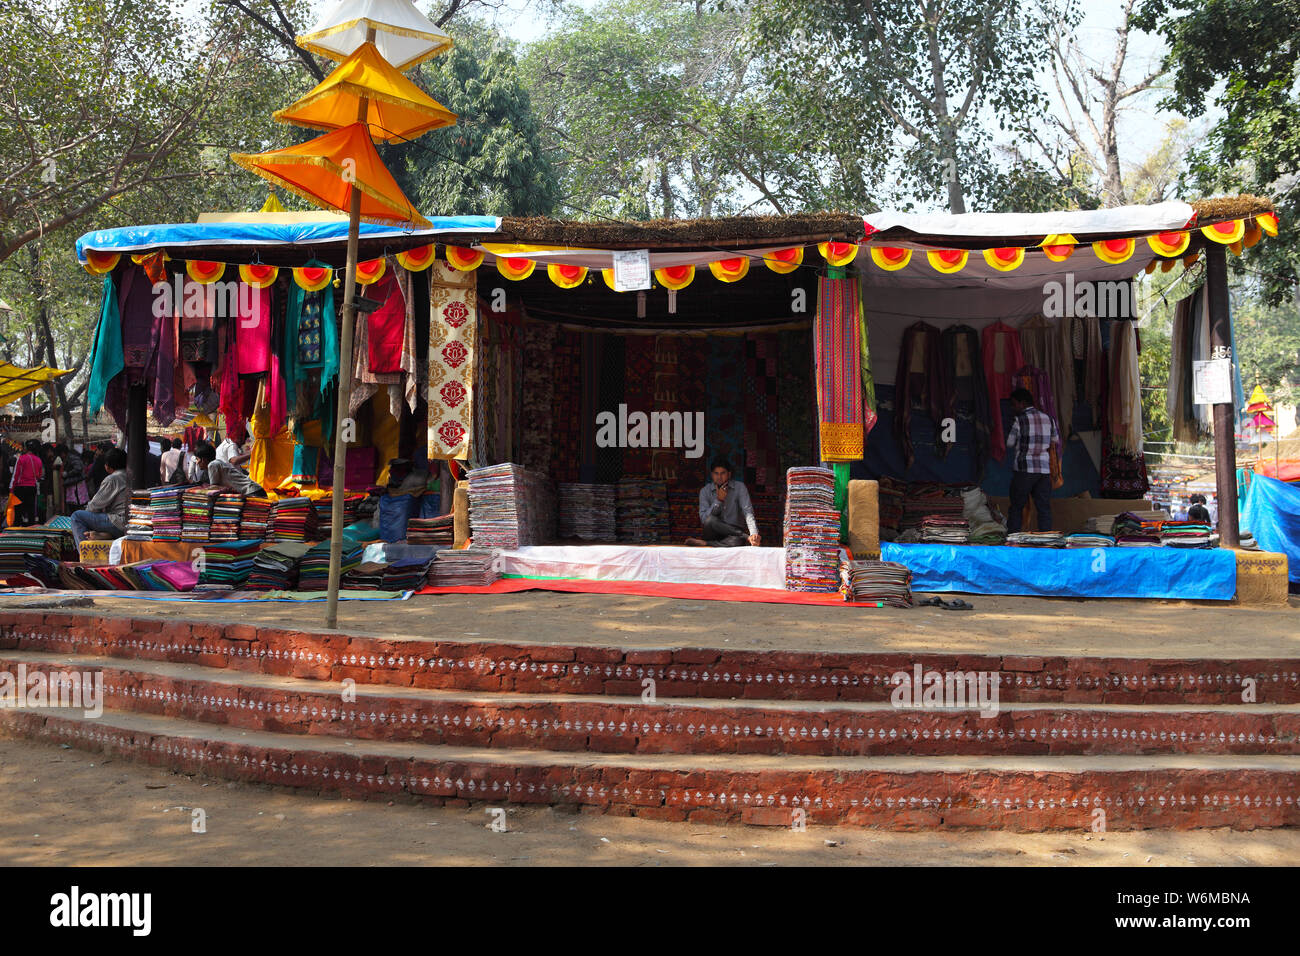 Clothing stores at Surajkund Crafts Mela, Surajkund, Faridabad, Haryana, India Stock Photo